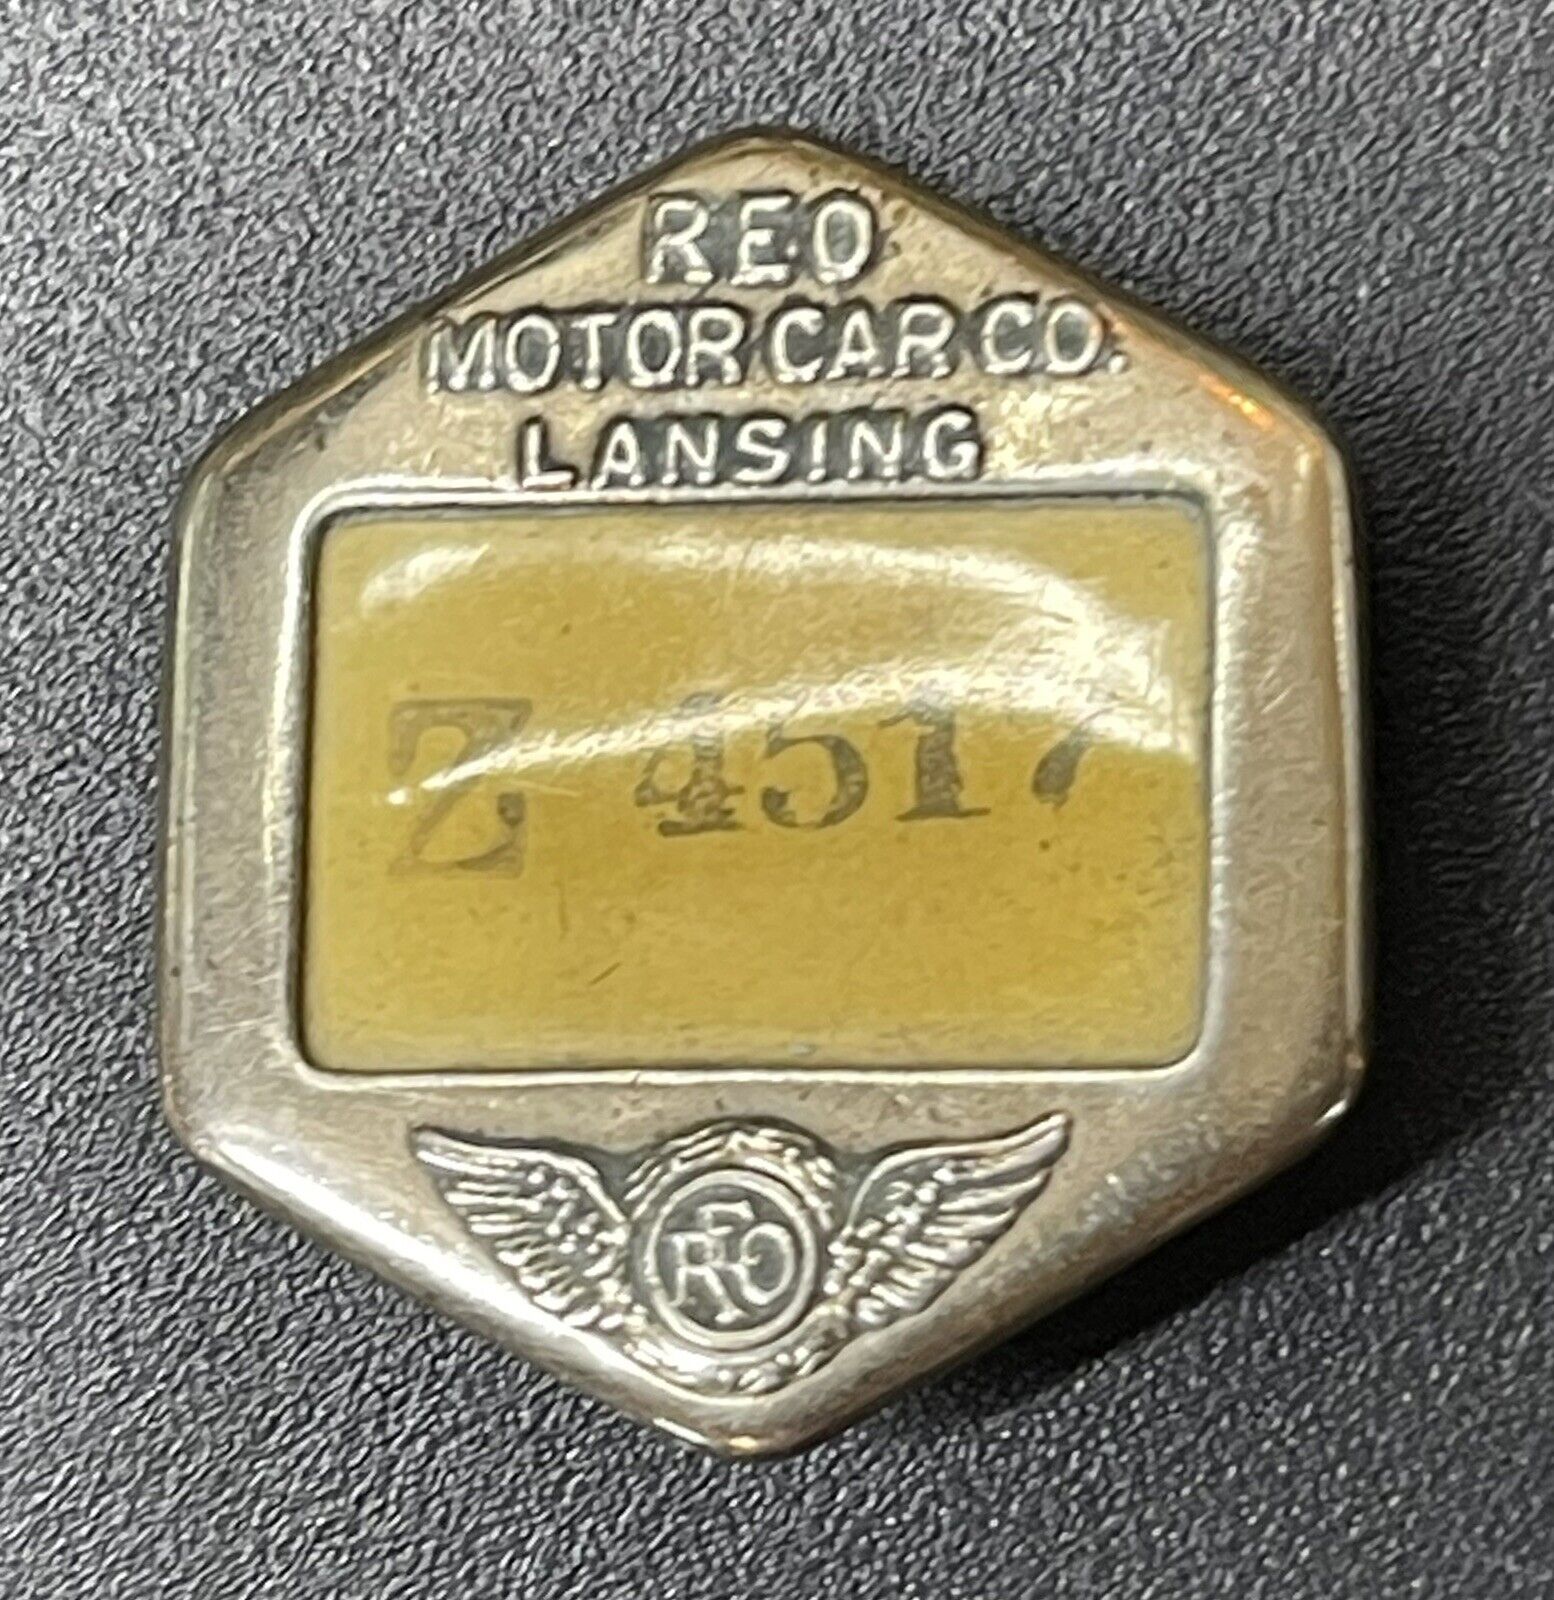 Vtg. REO MOTOR CAR CO. employee Badge ID metal pin holder